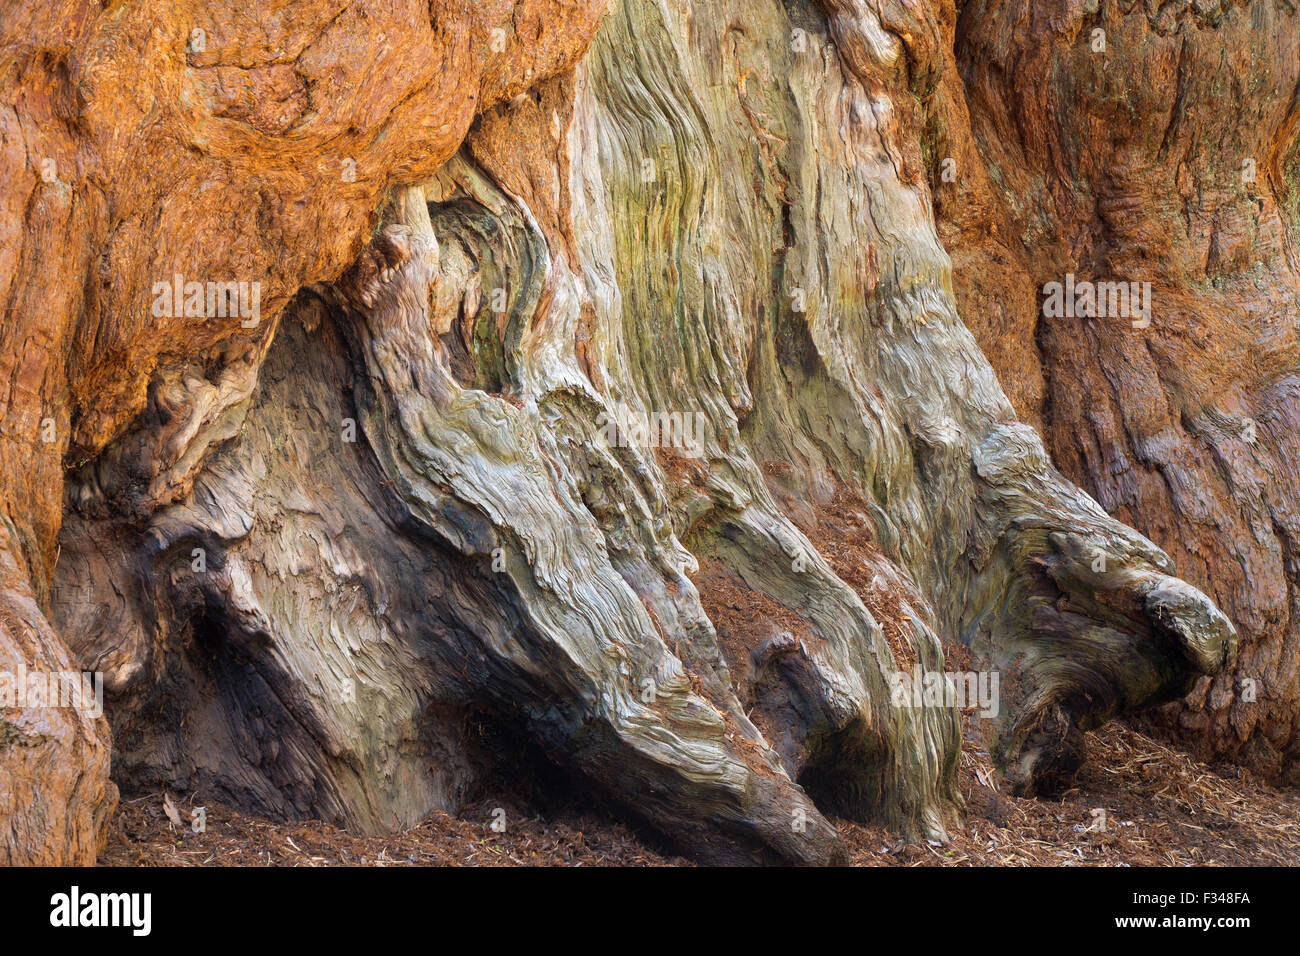 Sequoia gigante alberi di Sequoia National Park, California, Stati Uniti d'America Foto Stock